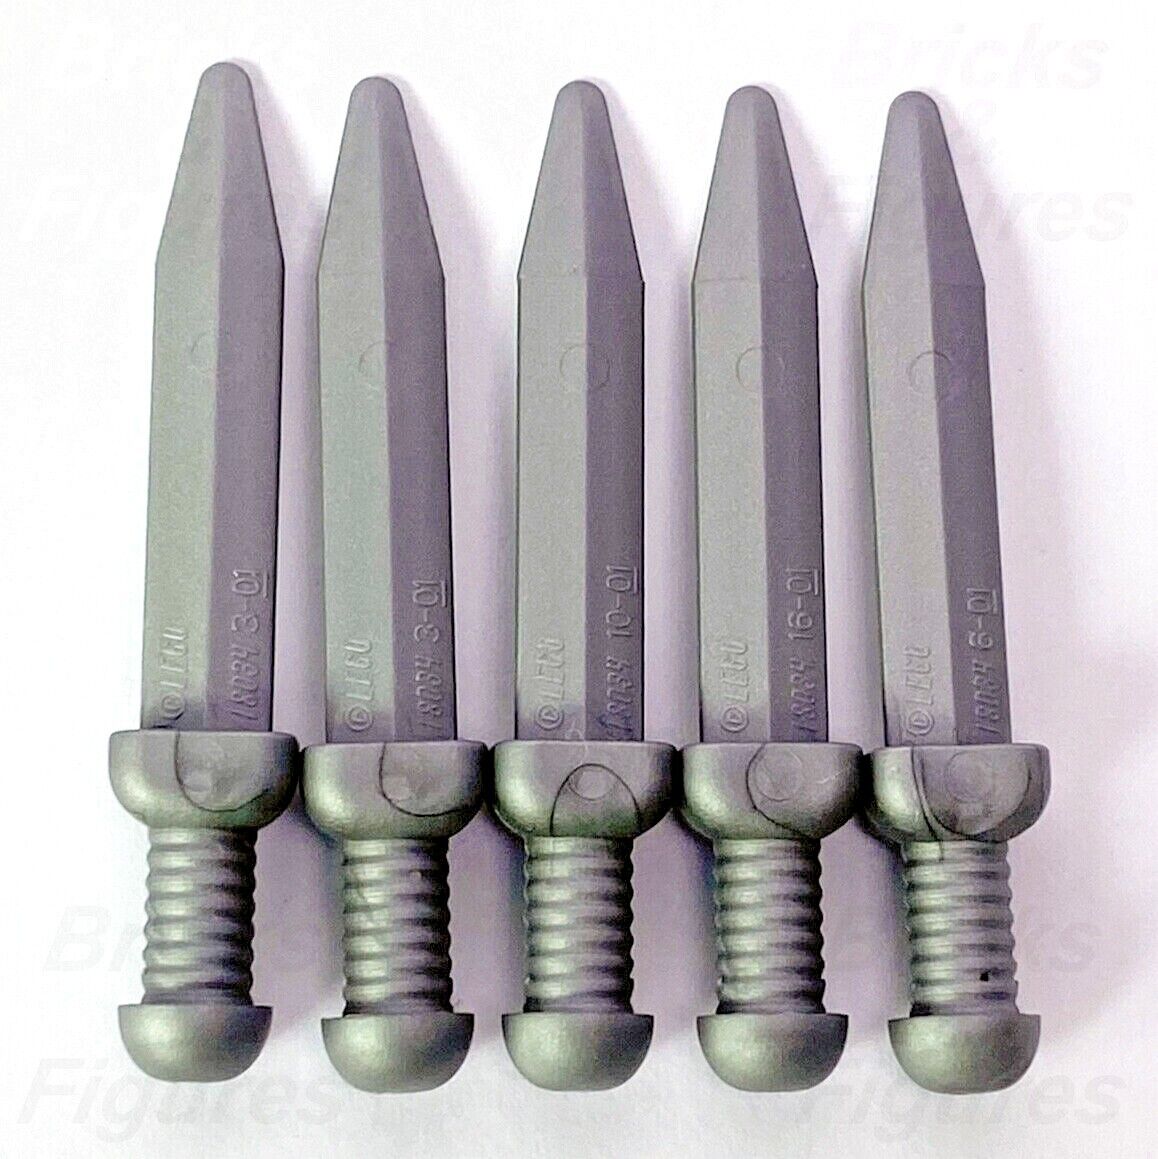 5 x LEGO Flat Silver Roman Gladius Swords Blades Minifigure Weapon Parts 18034 - Bricks & Figures